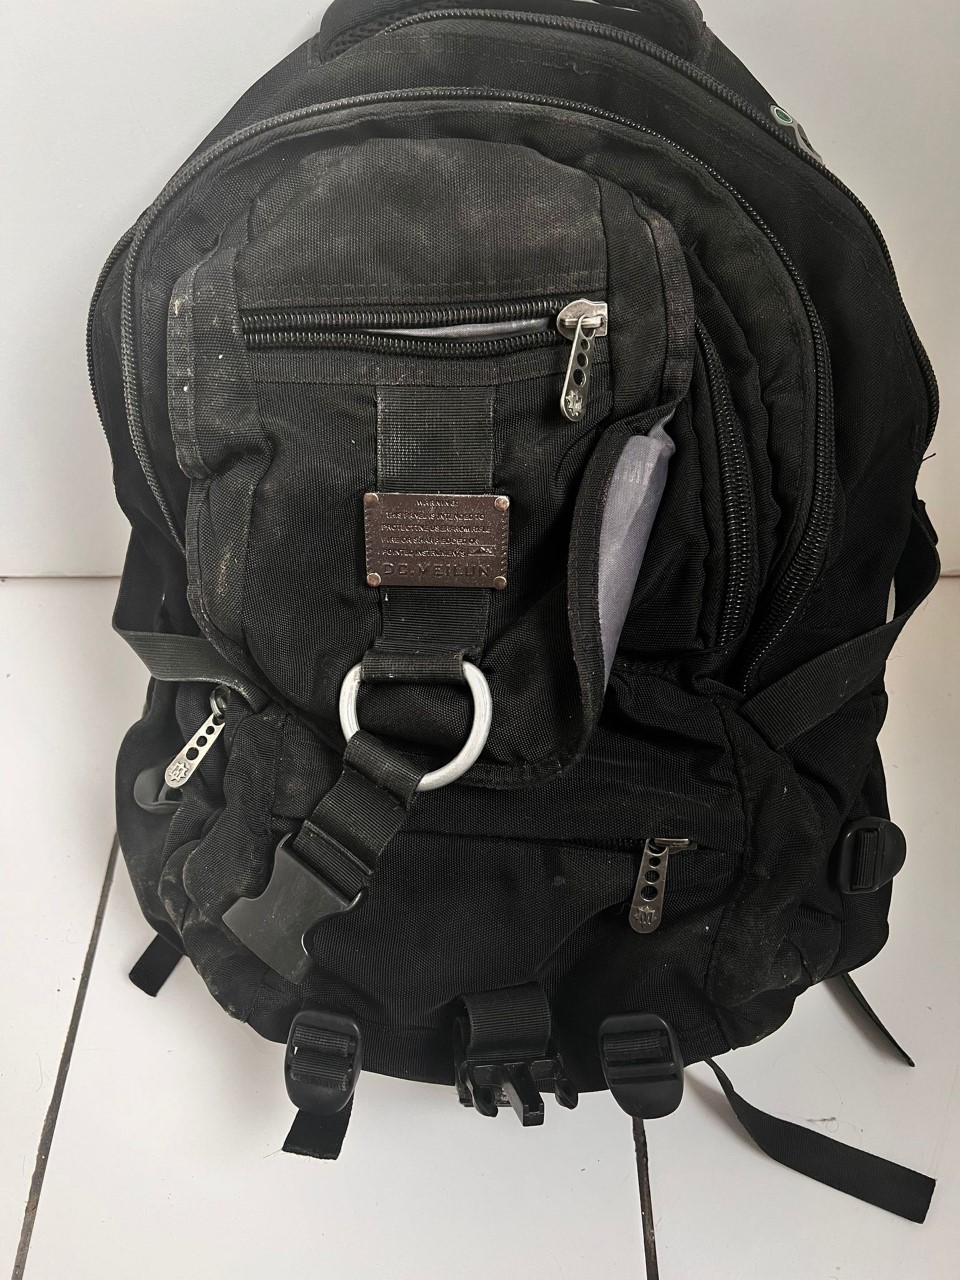 Black backpack on floor museum of calais